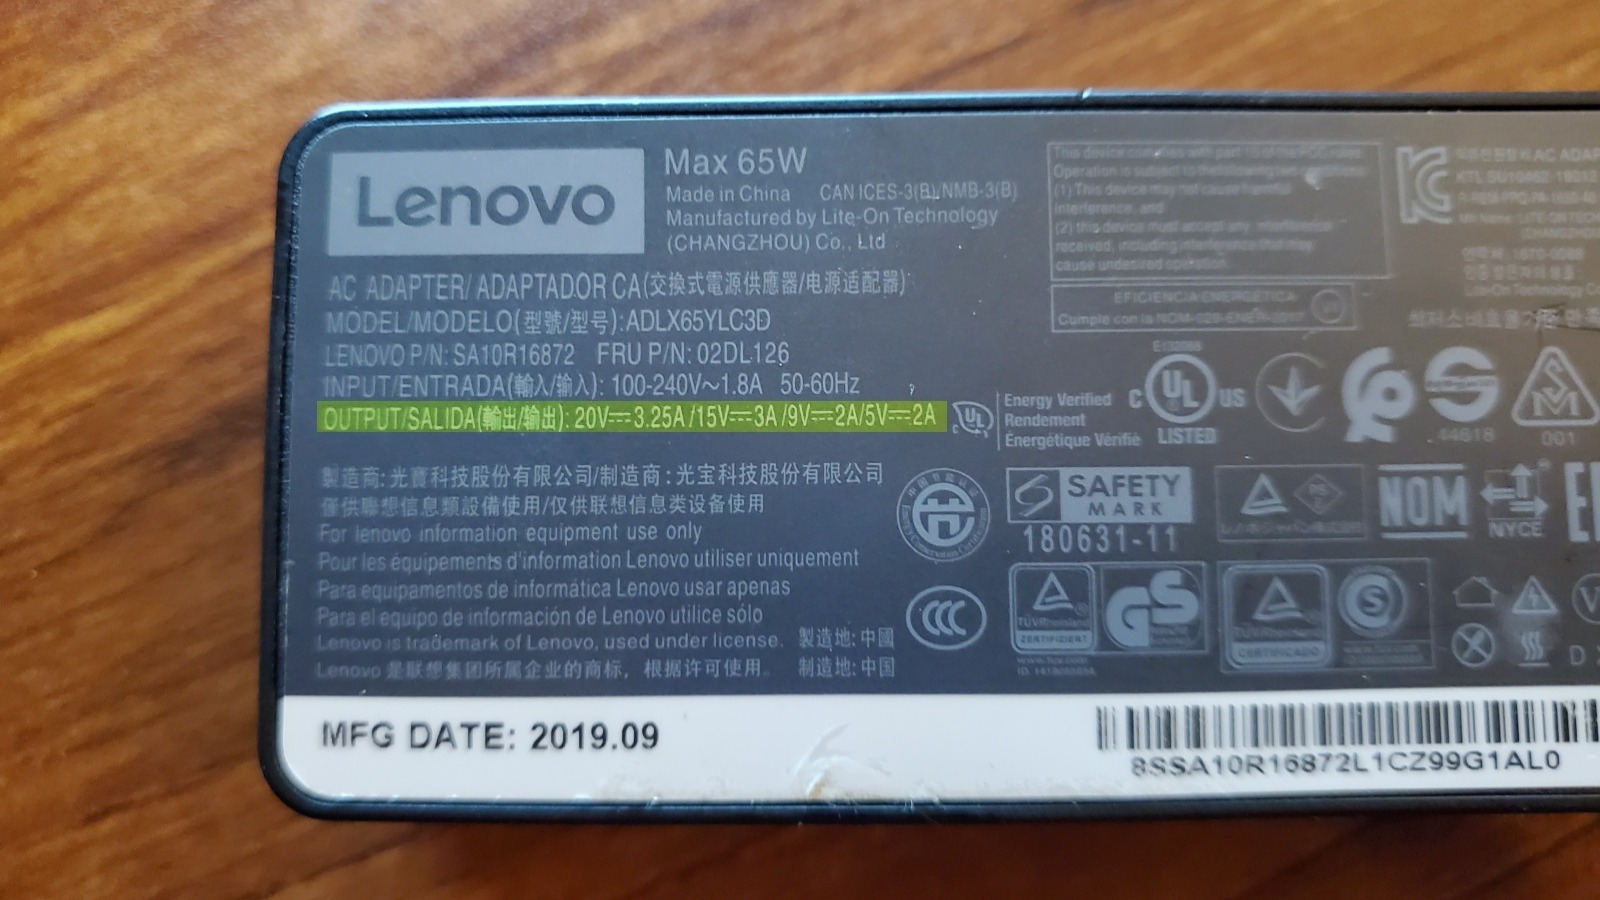 Lenovo charging brick profiles